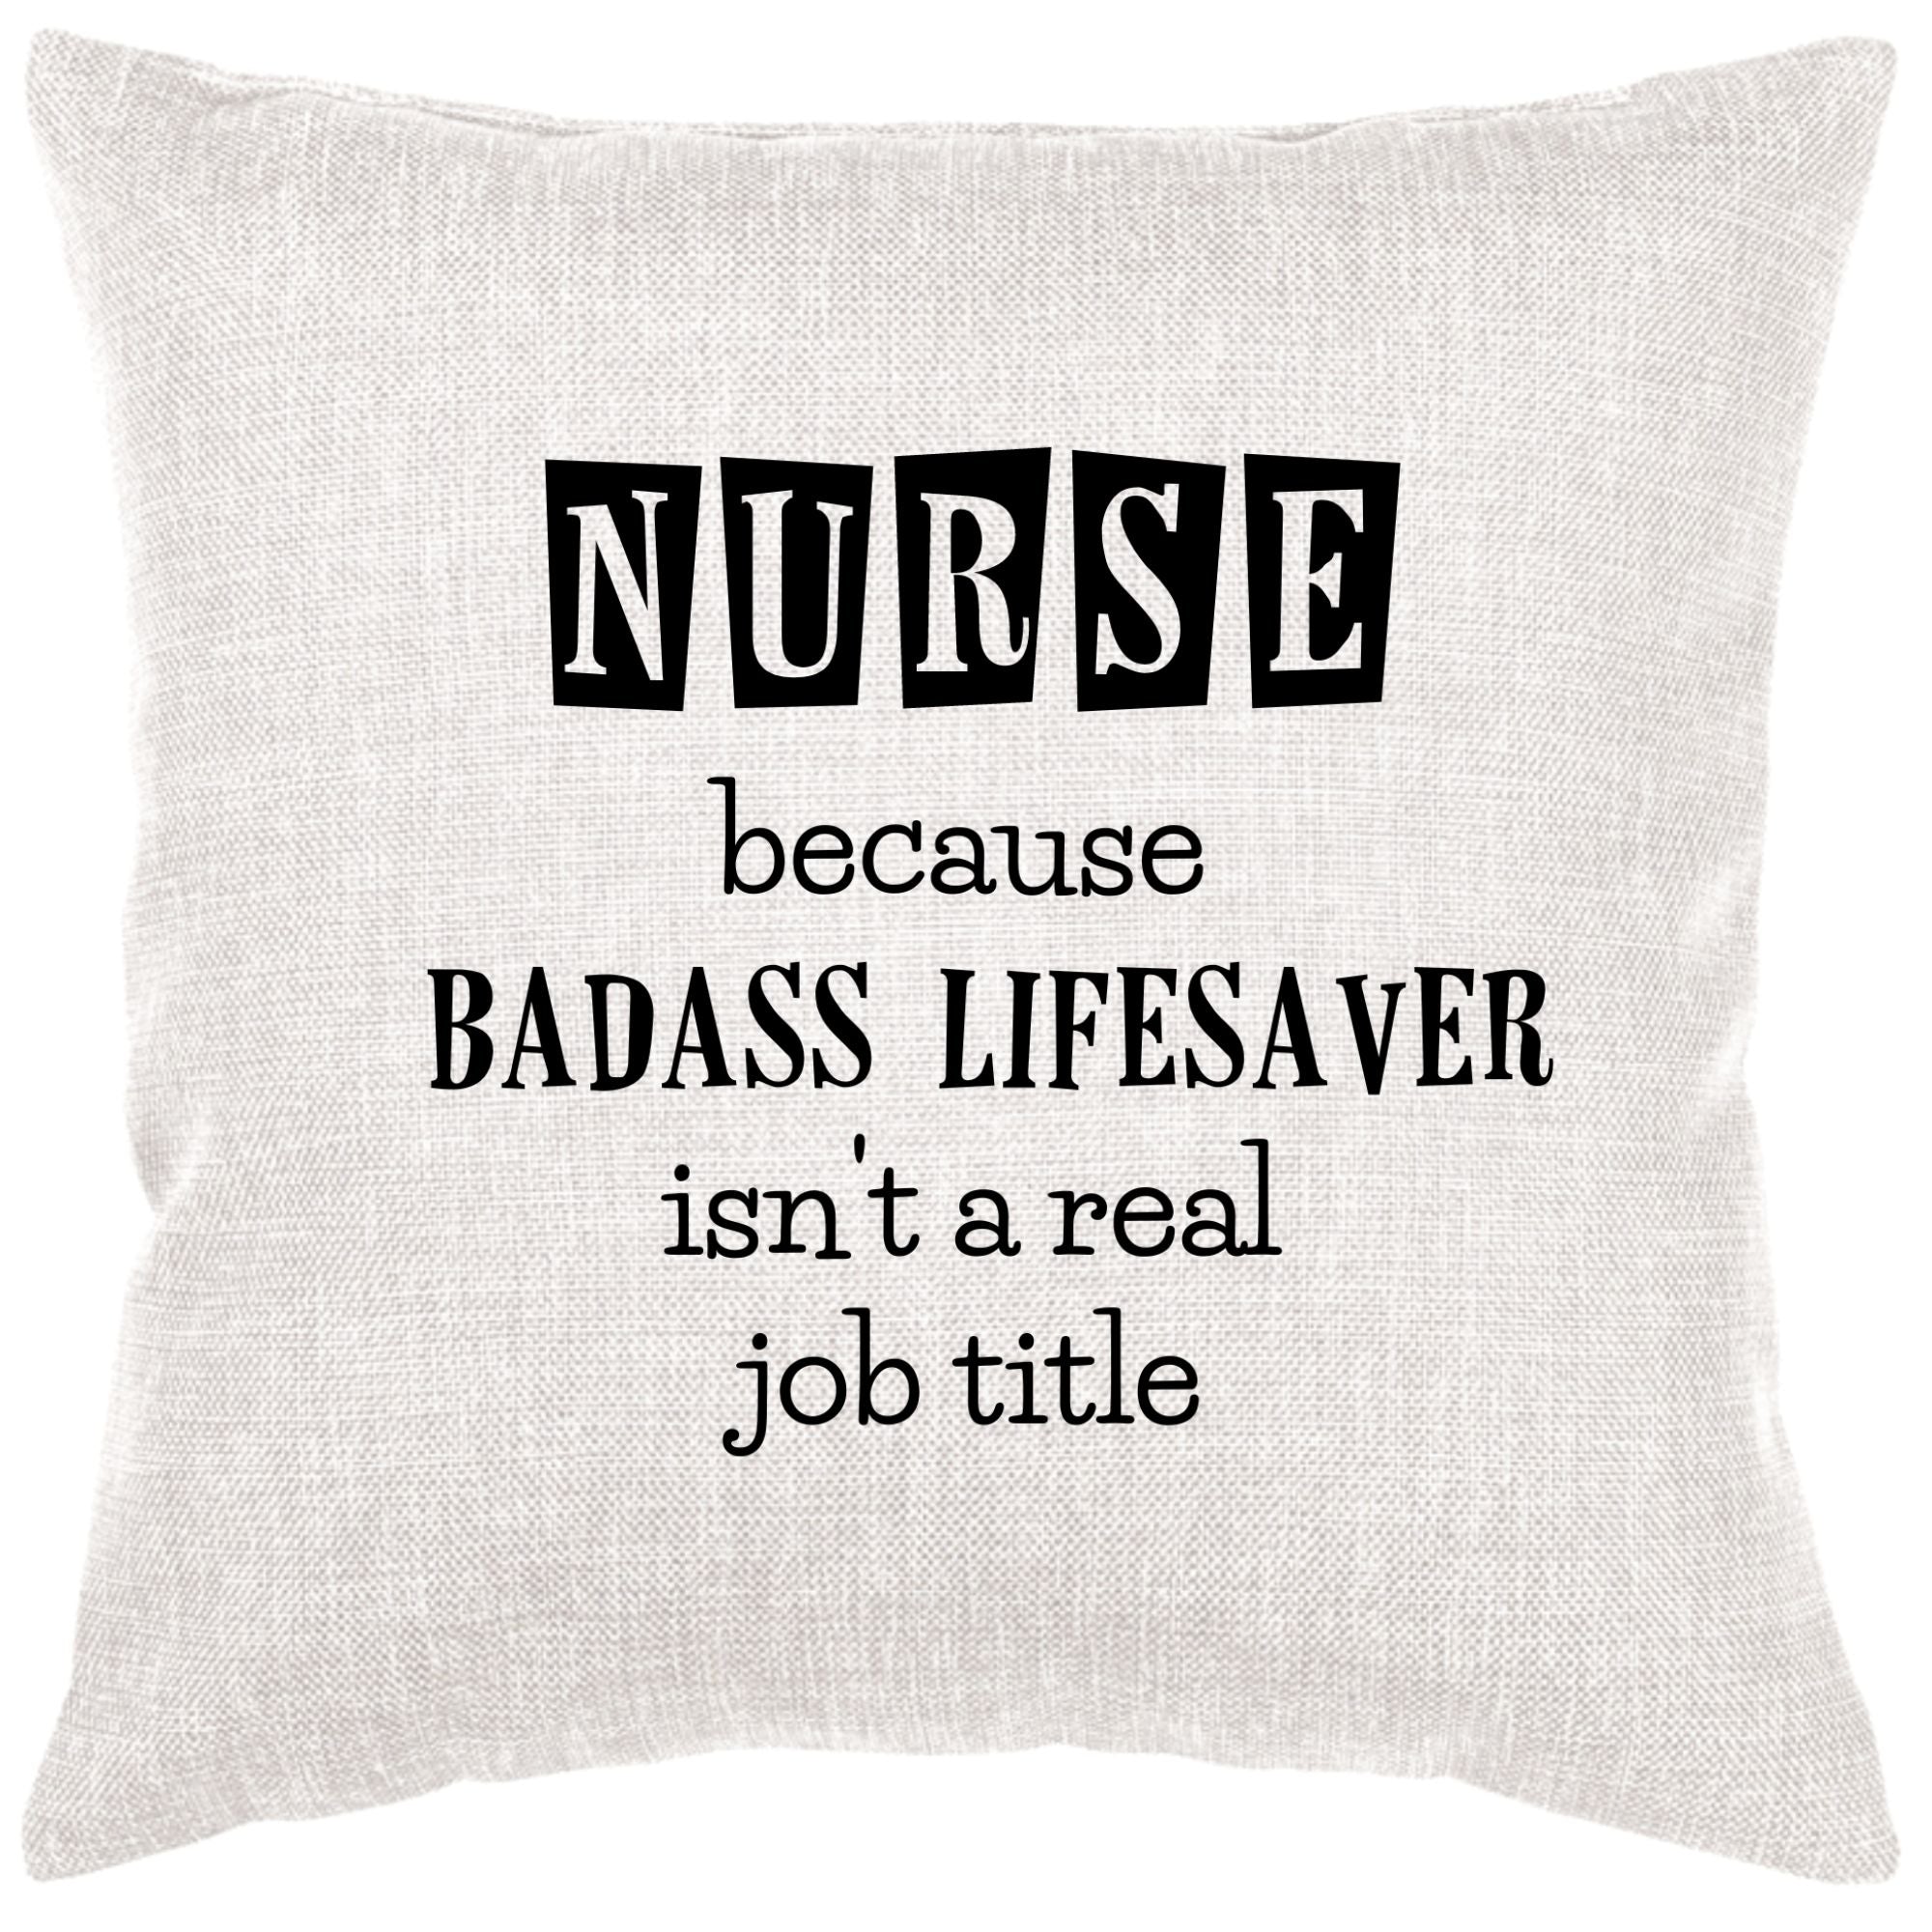 Pure Nursing, Nursing Jobs